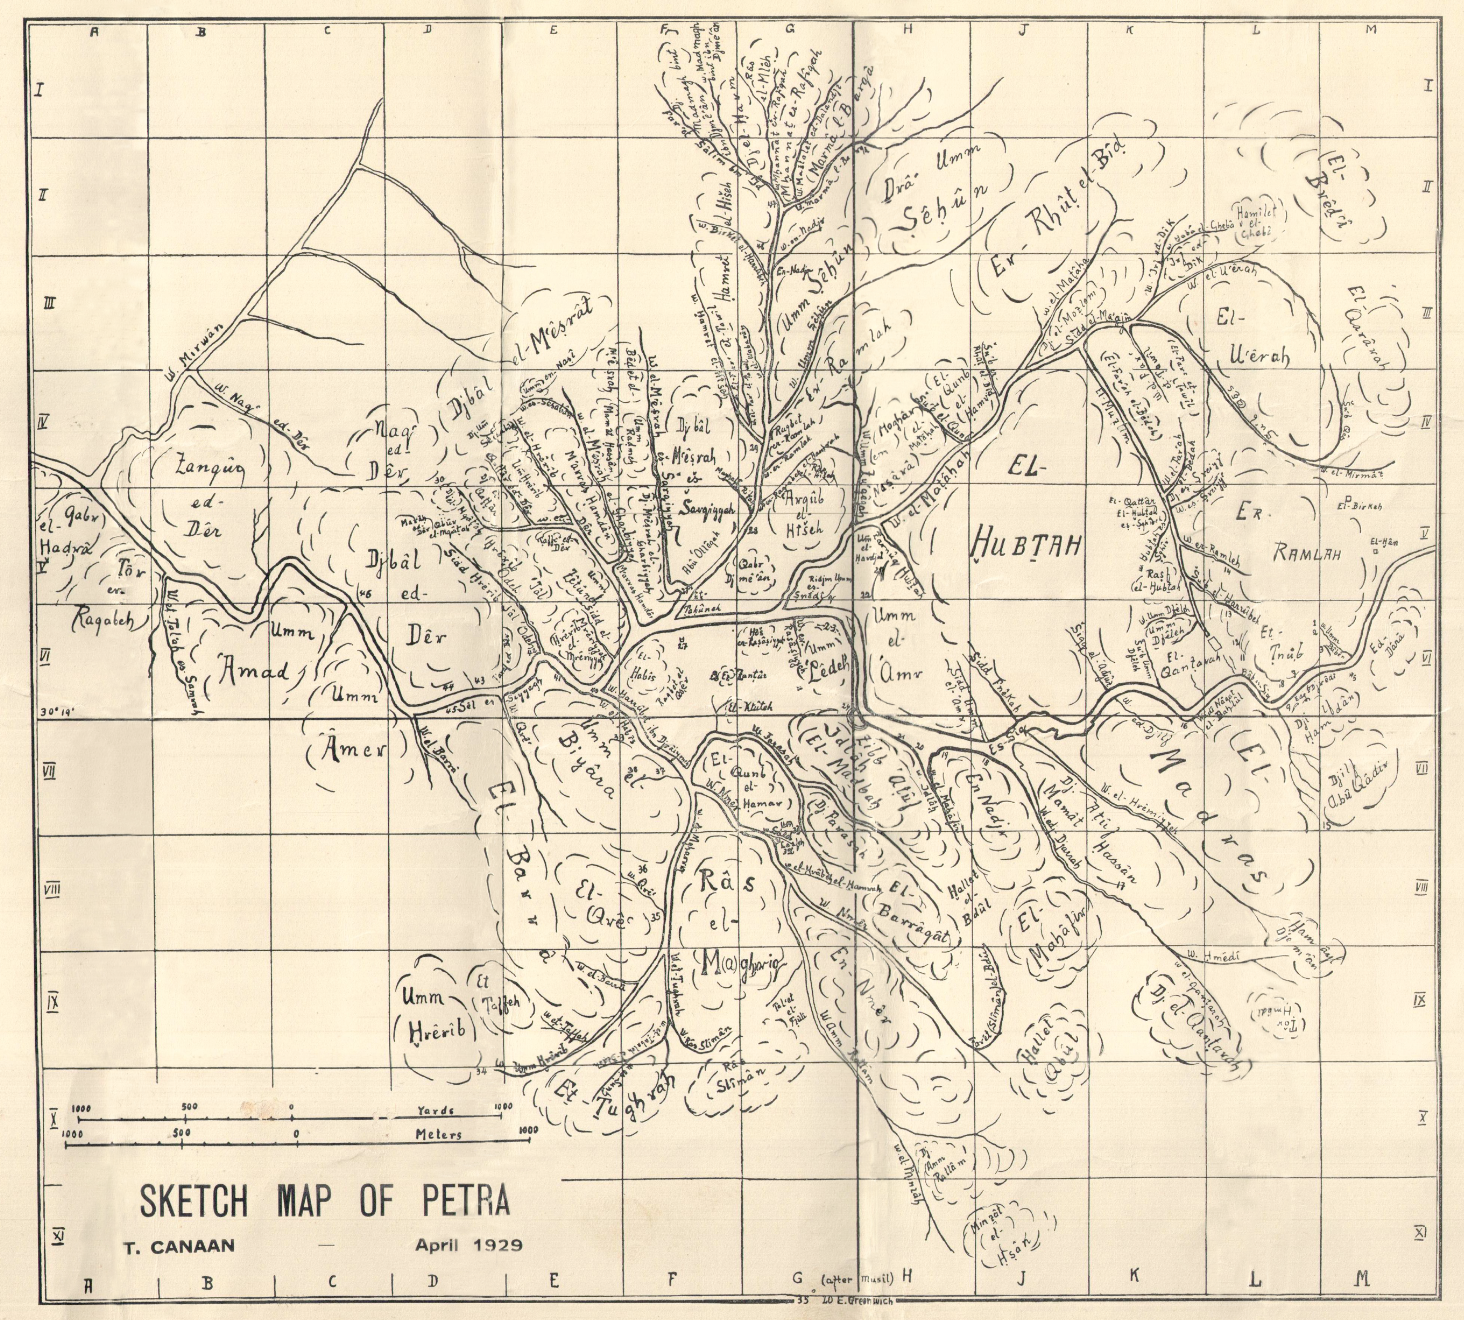 Sketch Map of Petra - خارطة مبدئية للبتراء